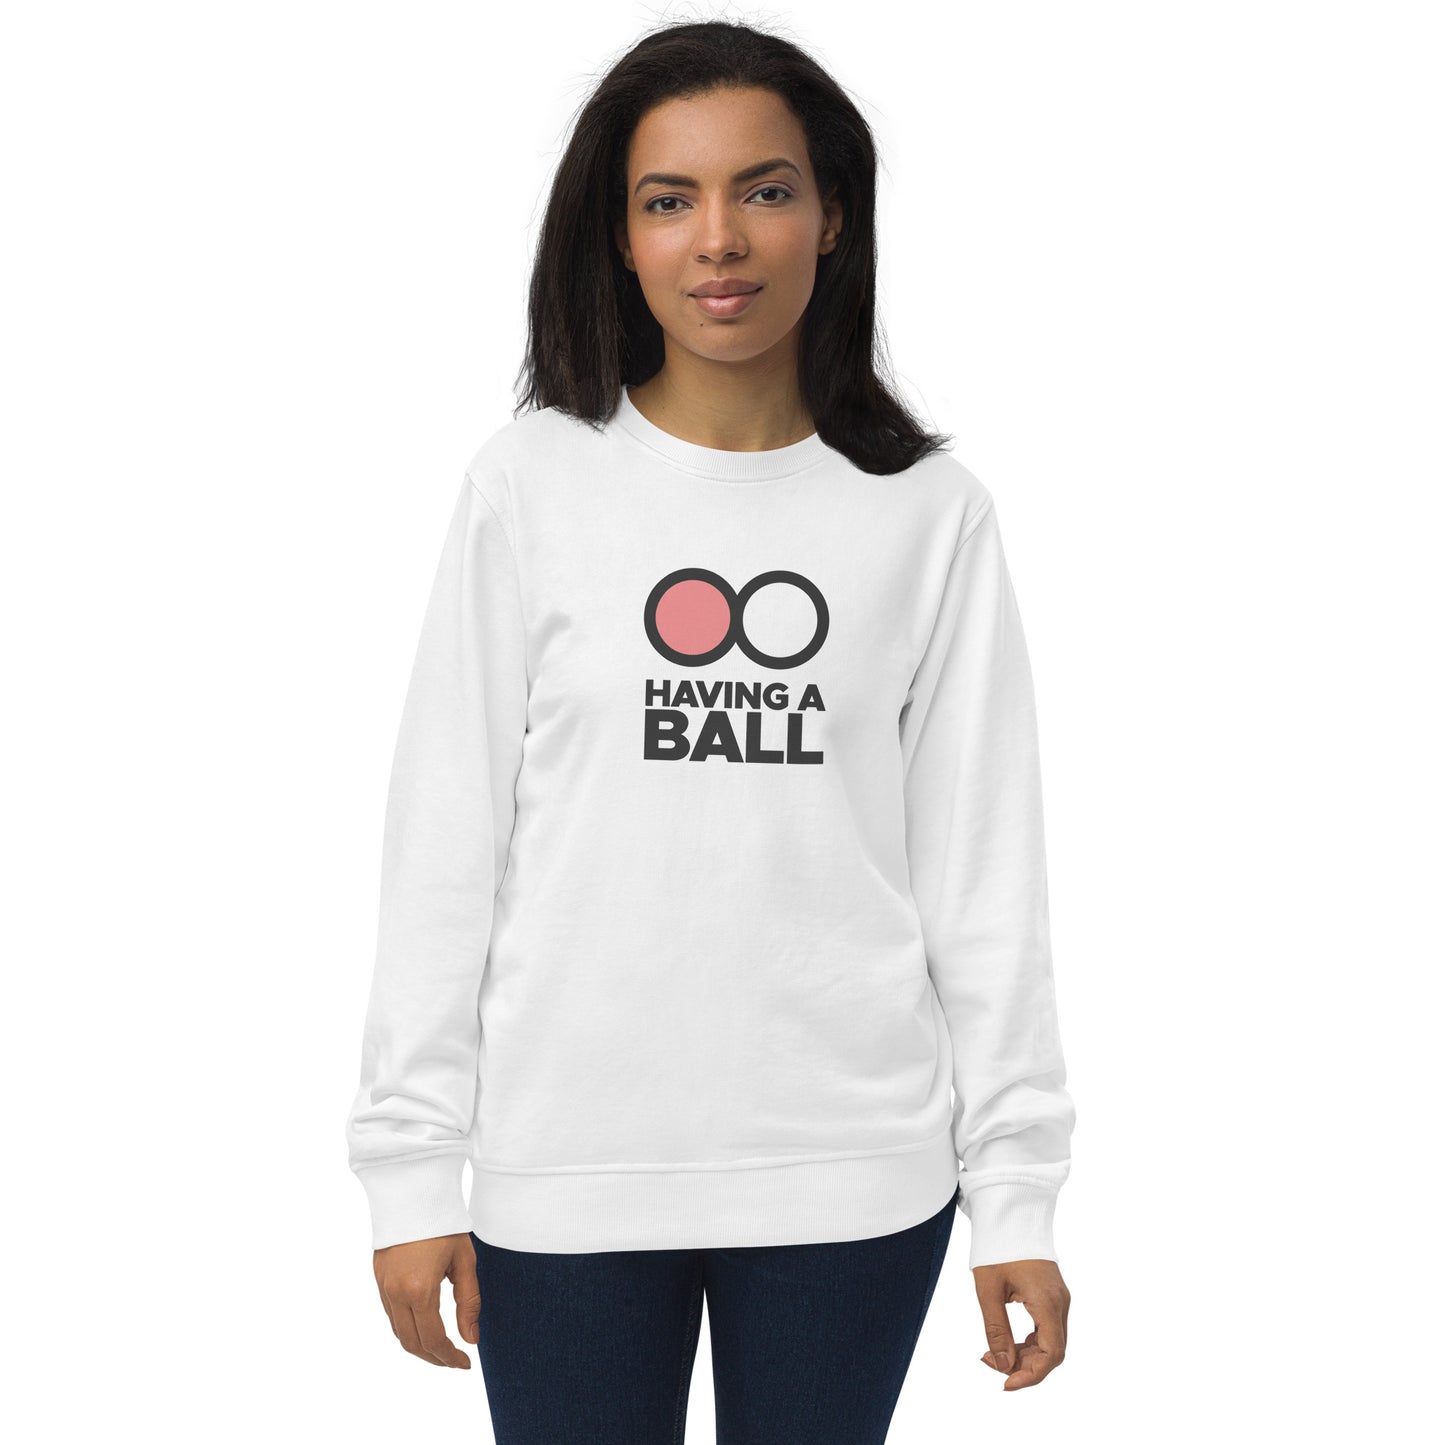 Having A Ball - Unisex Organic Sweatshirt (White Logo)